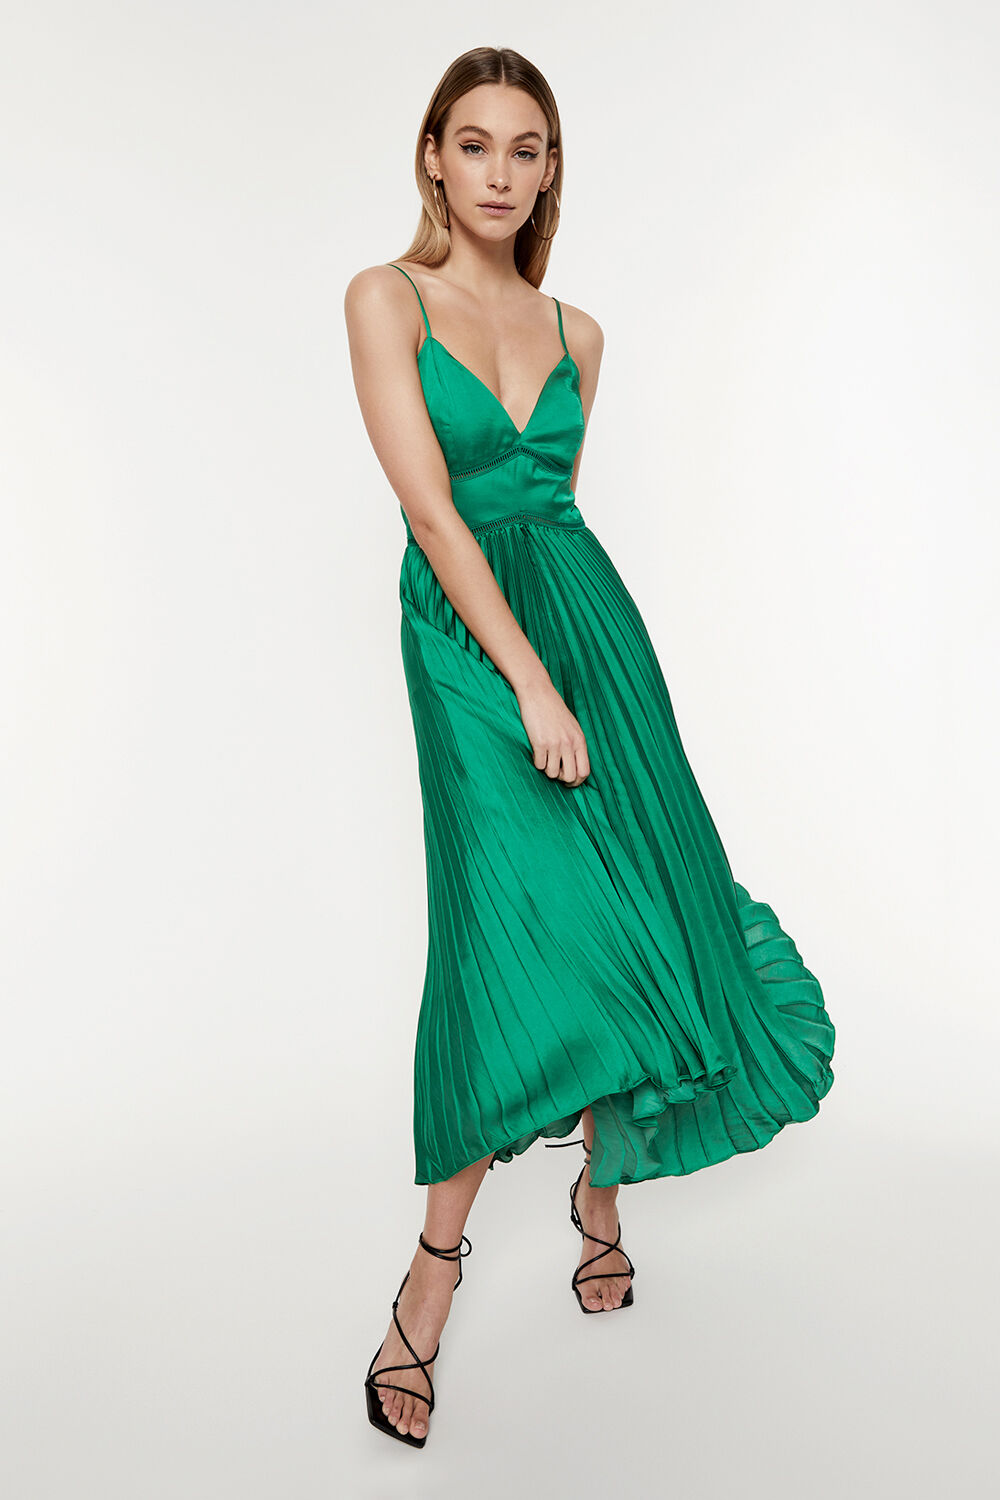 Mary Pleated Dress in Fern | Bardot